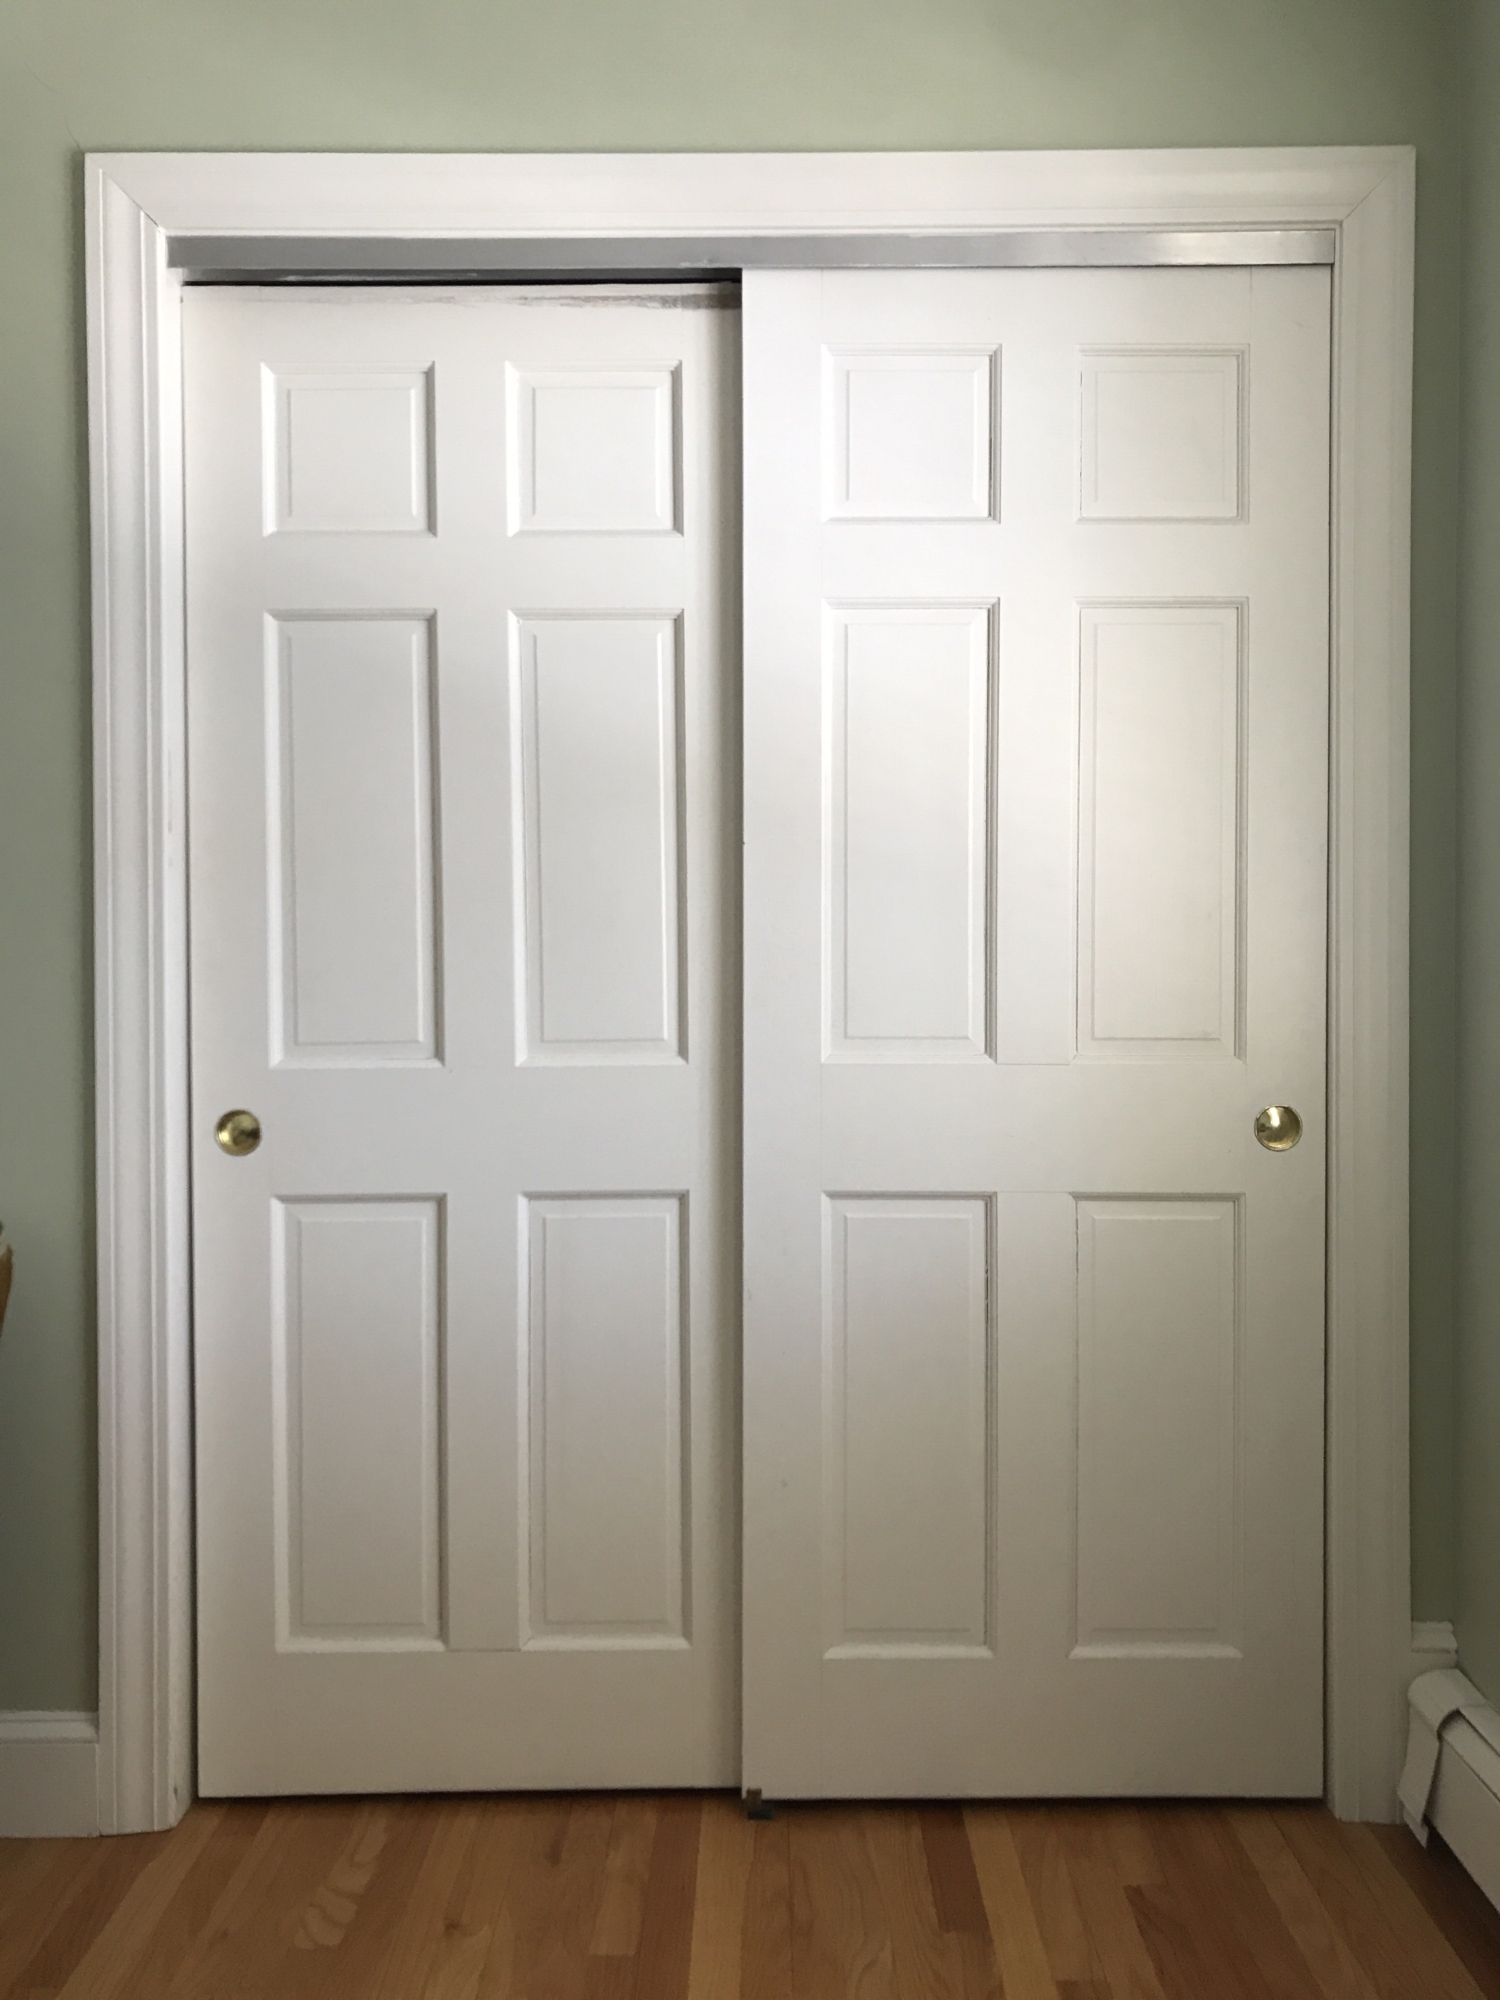 Convert Sliding Doors To Hinged, How Much To Install Mirrored Closet Doors